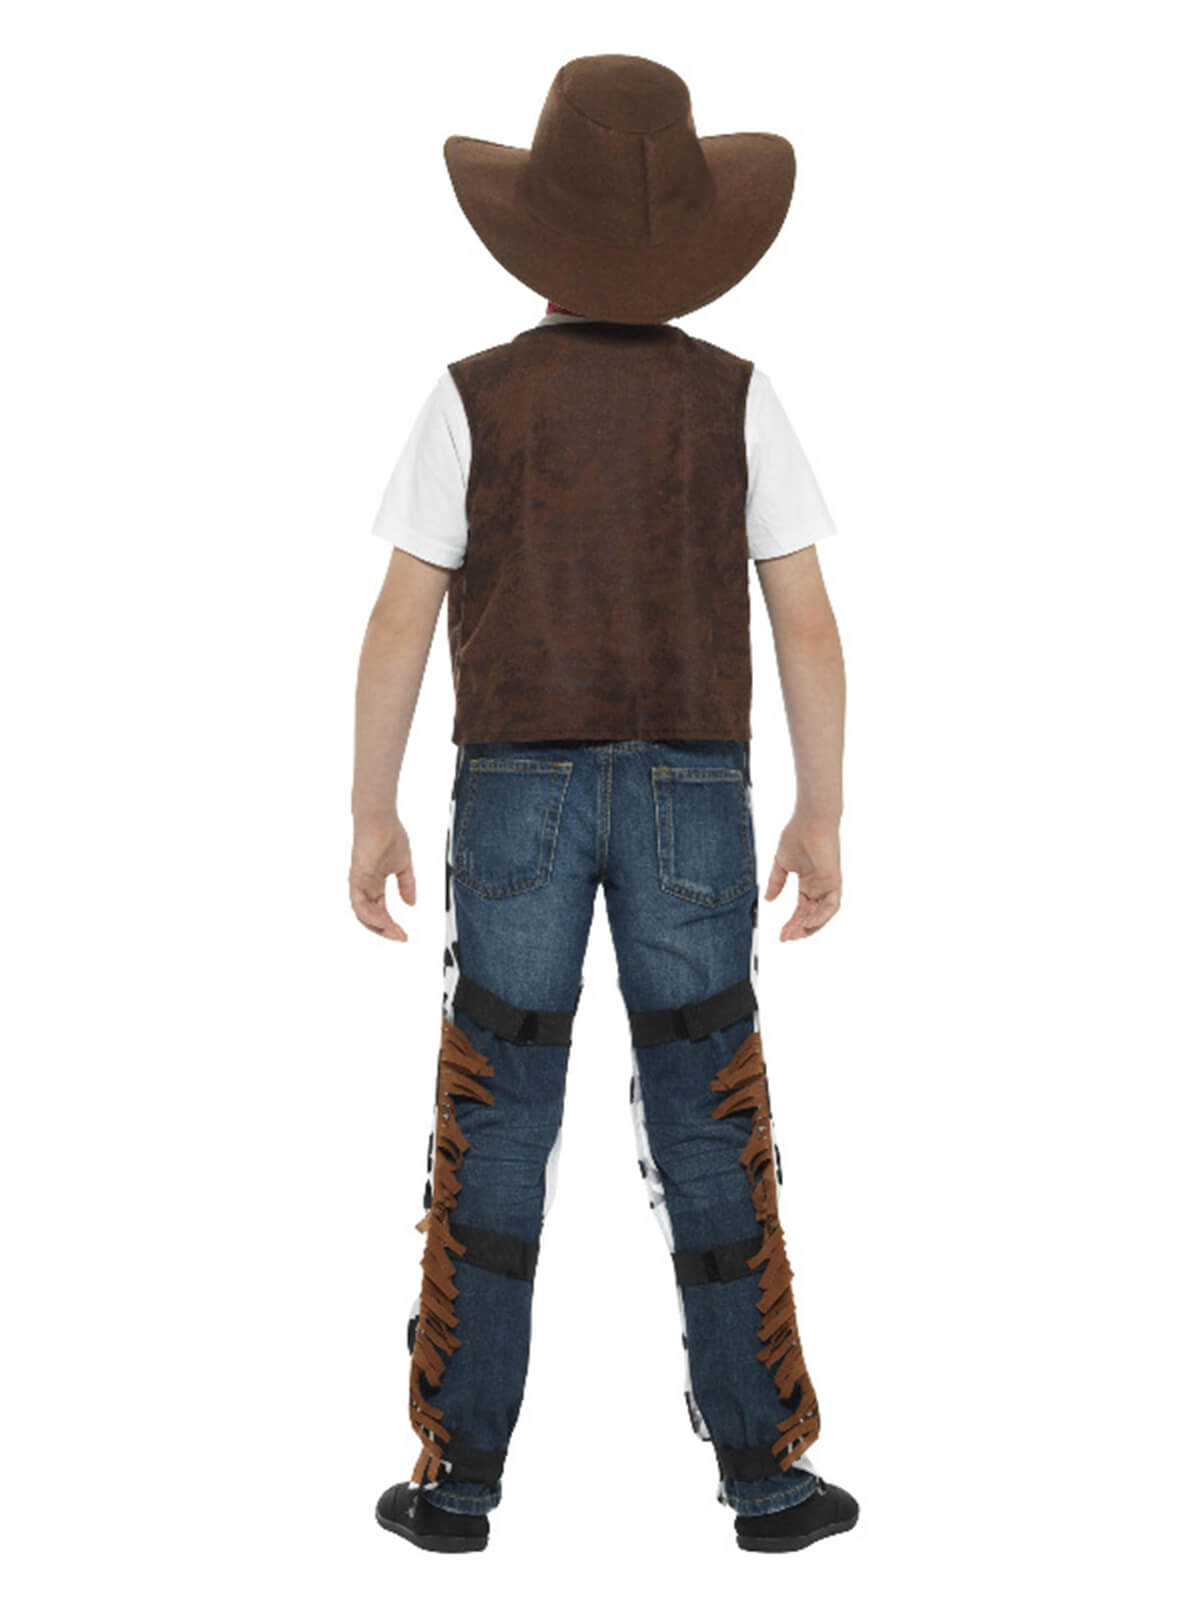 Texan Cowboy Costume, Brown – Fun Place